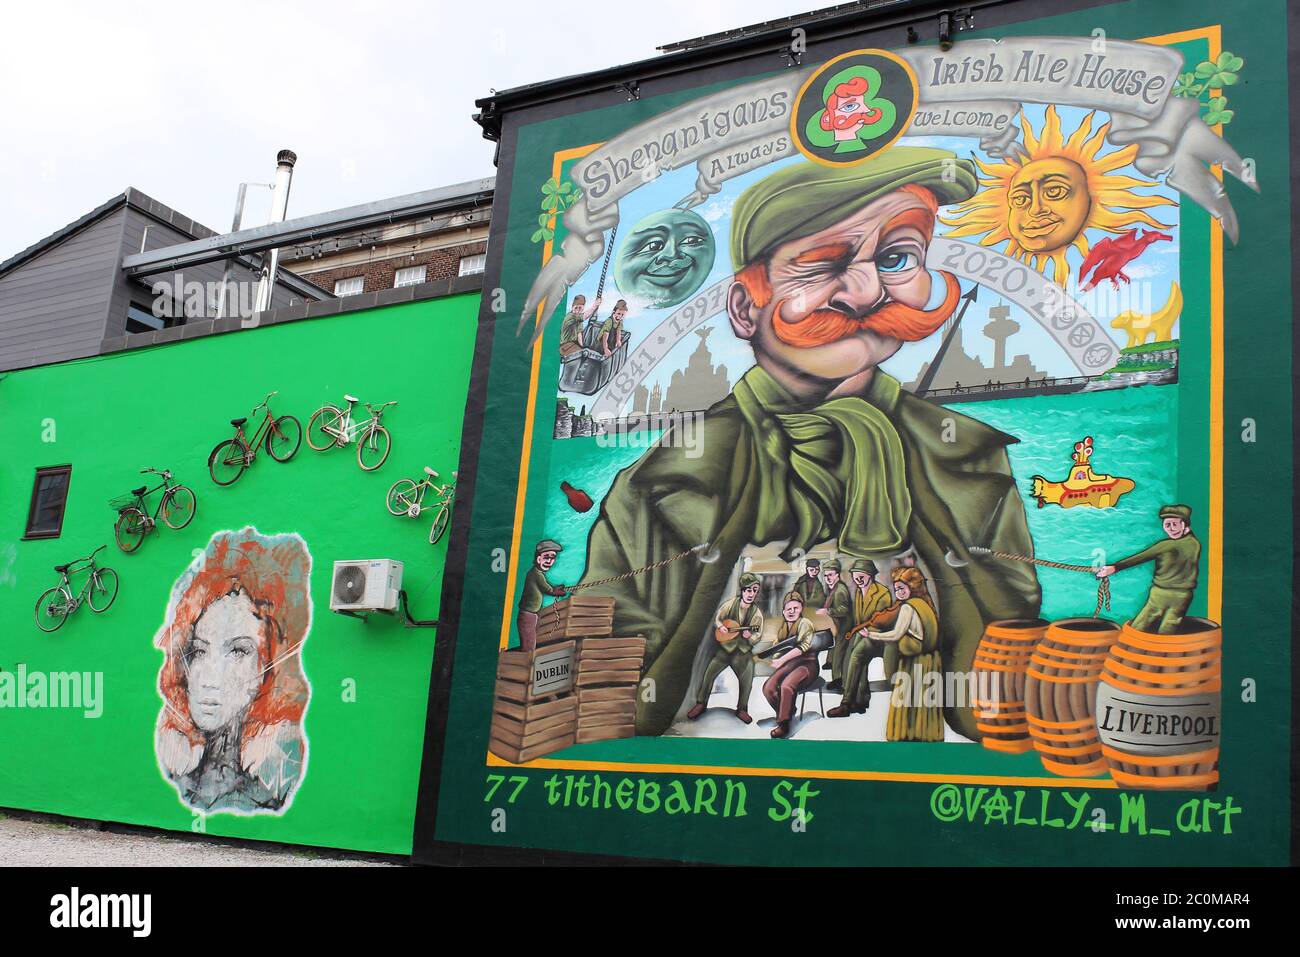 Shenanigans Irish Ale House, Tithebarn Street, Liverpool Foto Stock